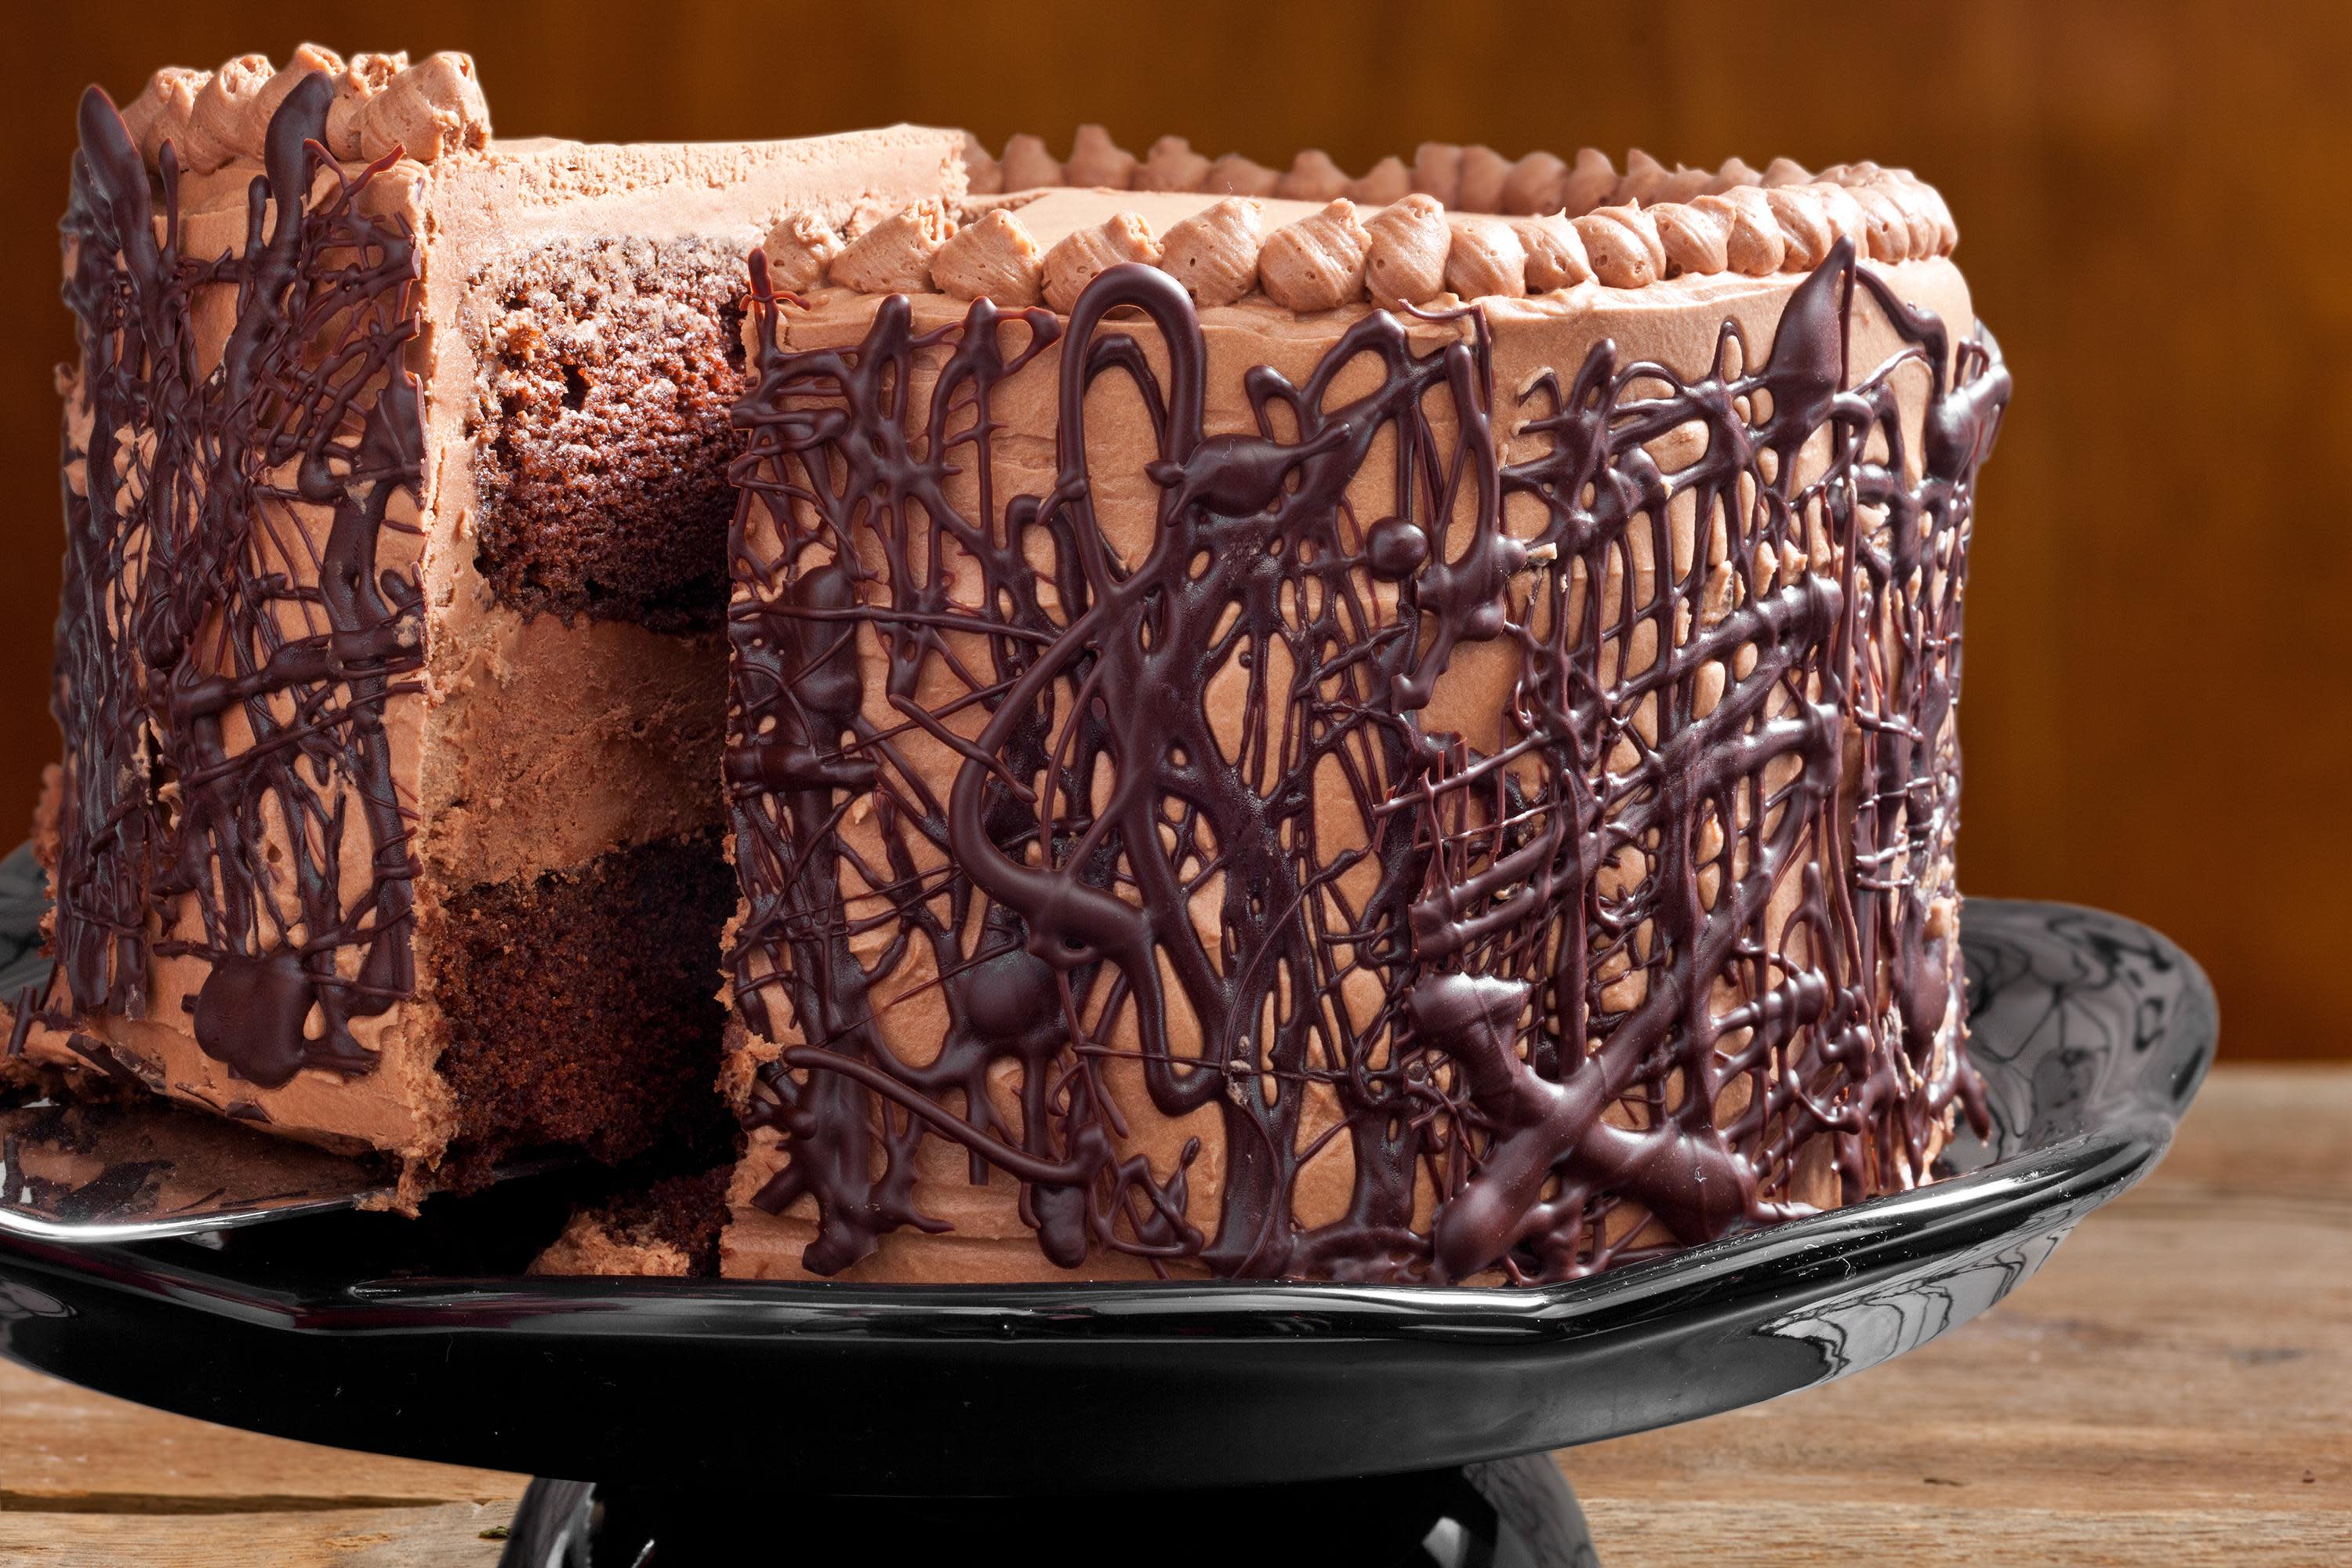 Шоколадный торт желатин. Шоколадный торт. Украшения из шоколада. Украшение торта шоколадом. Торт с шоколадом.